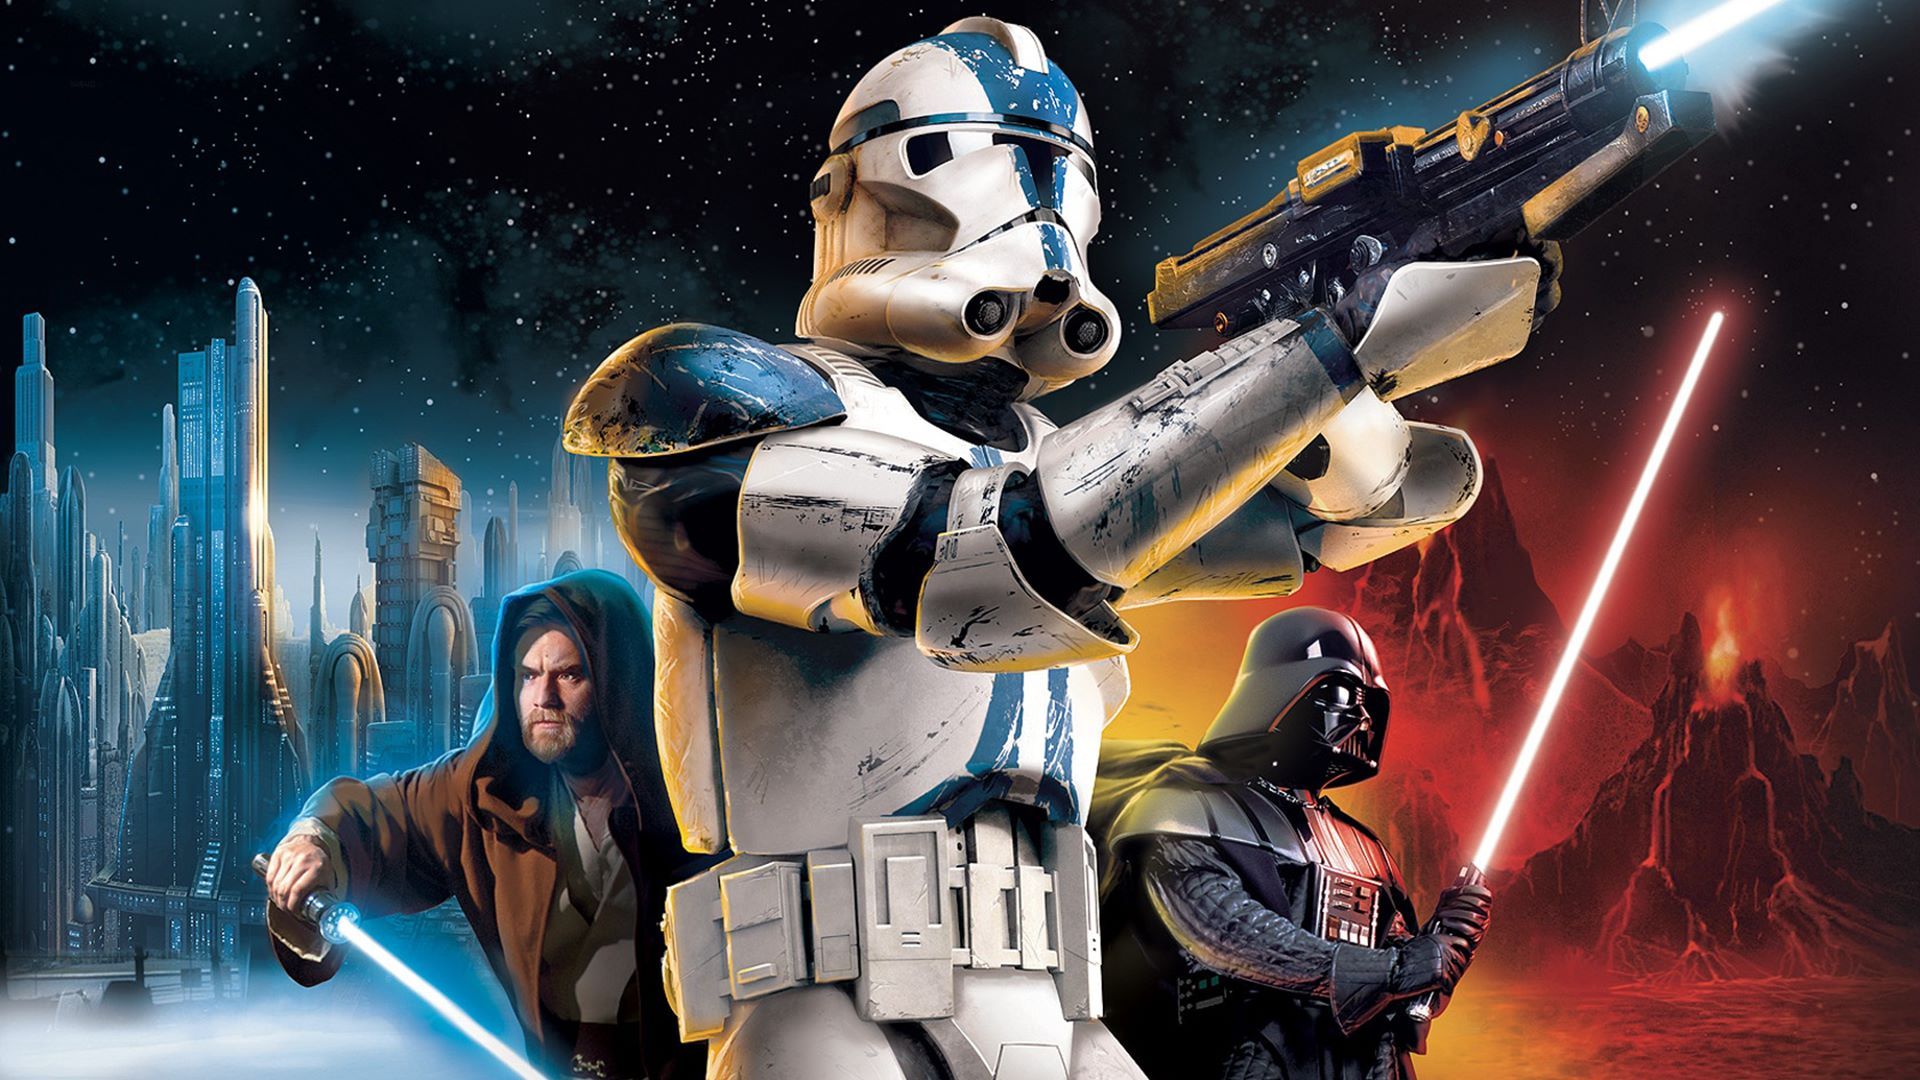 Original 'Star Wars: Battlefront' Online Multiplayer Is Active Again -  GAMINGbible